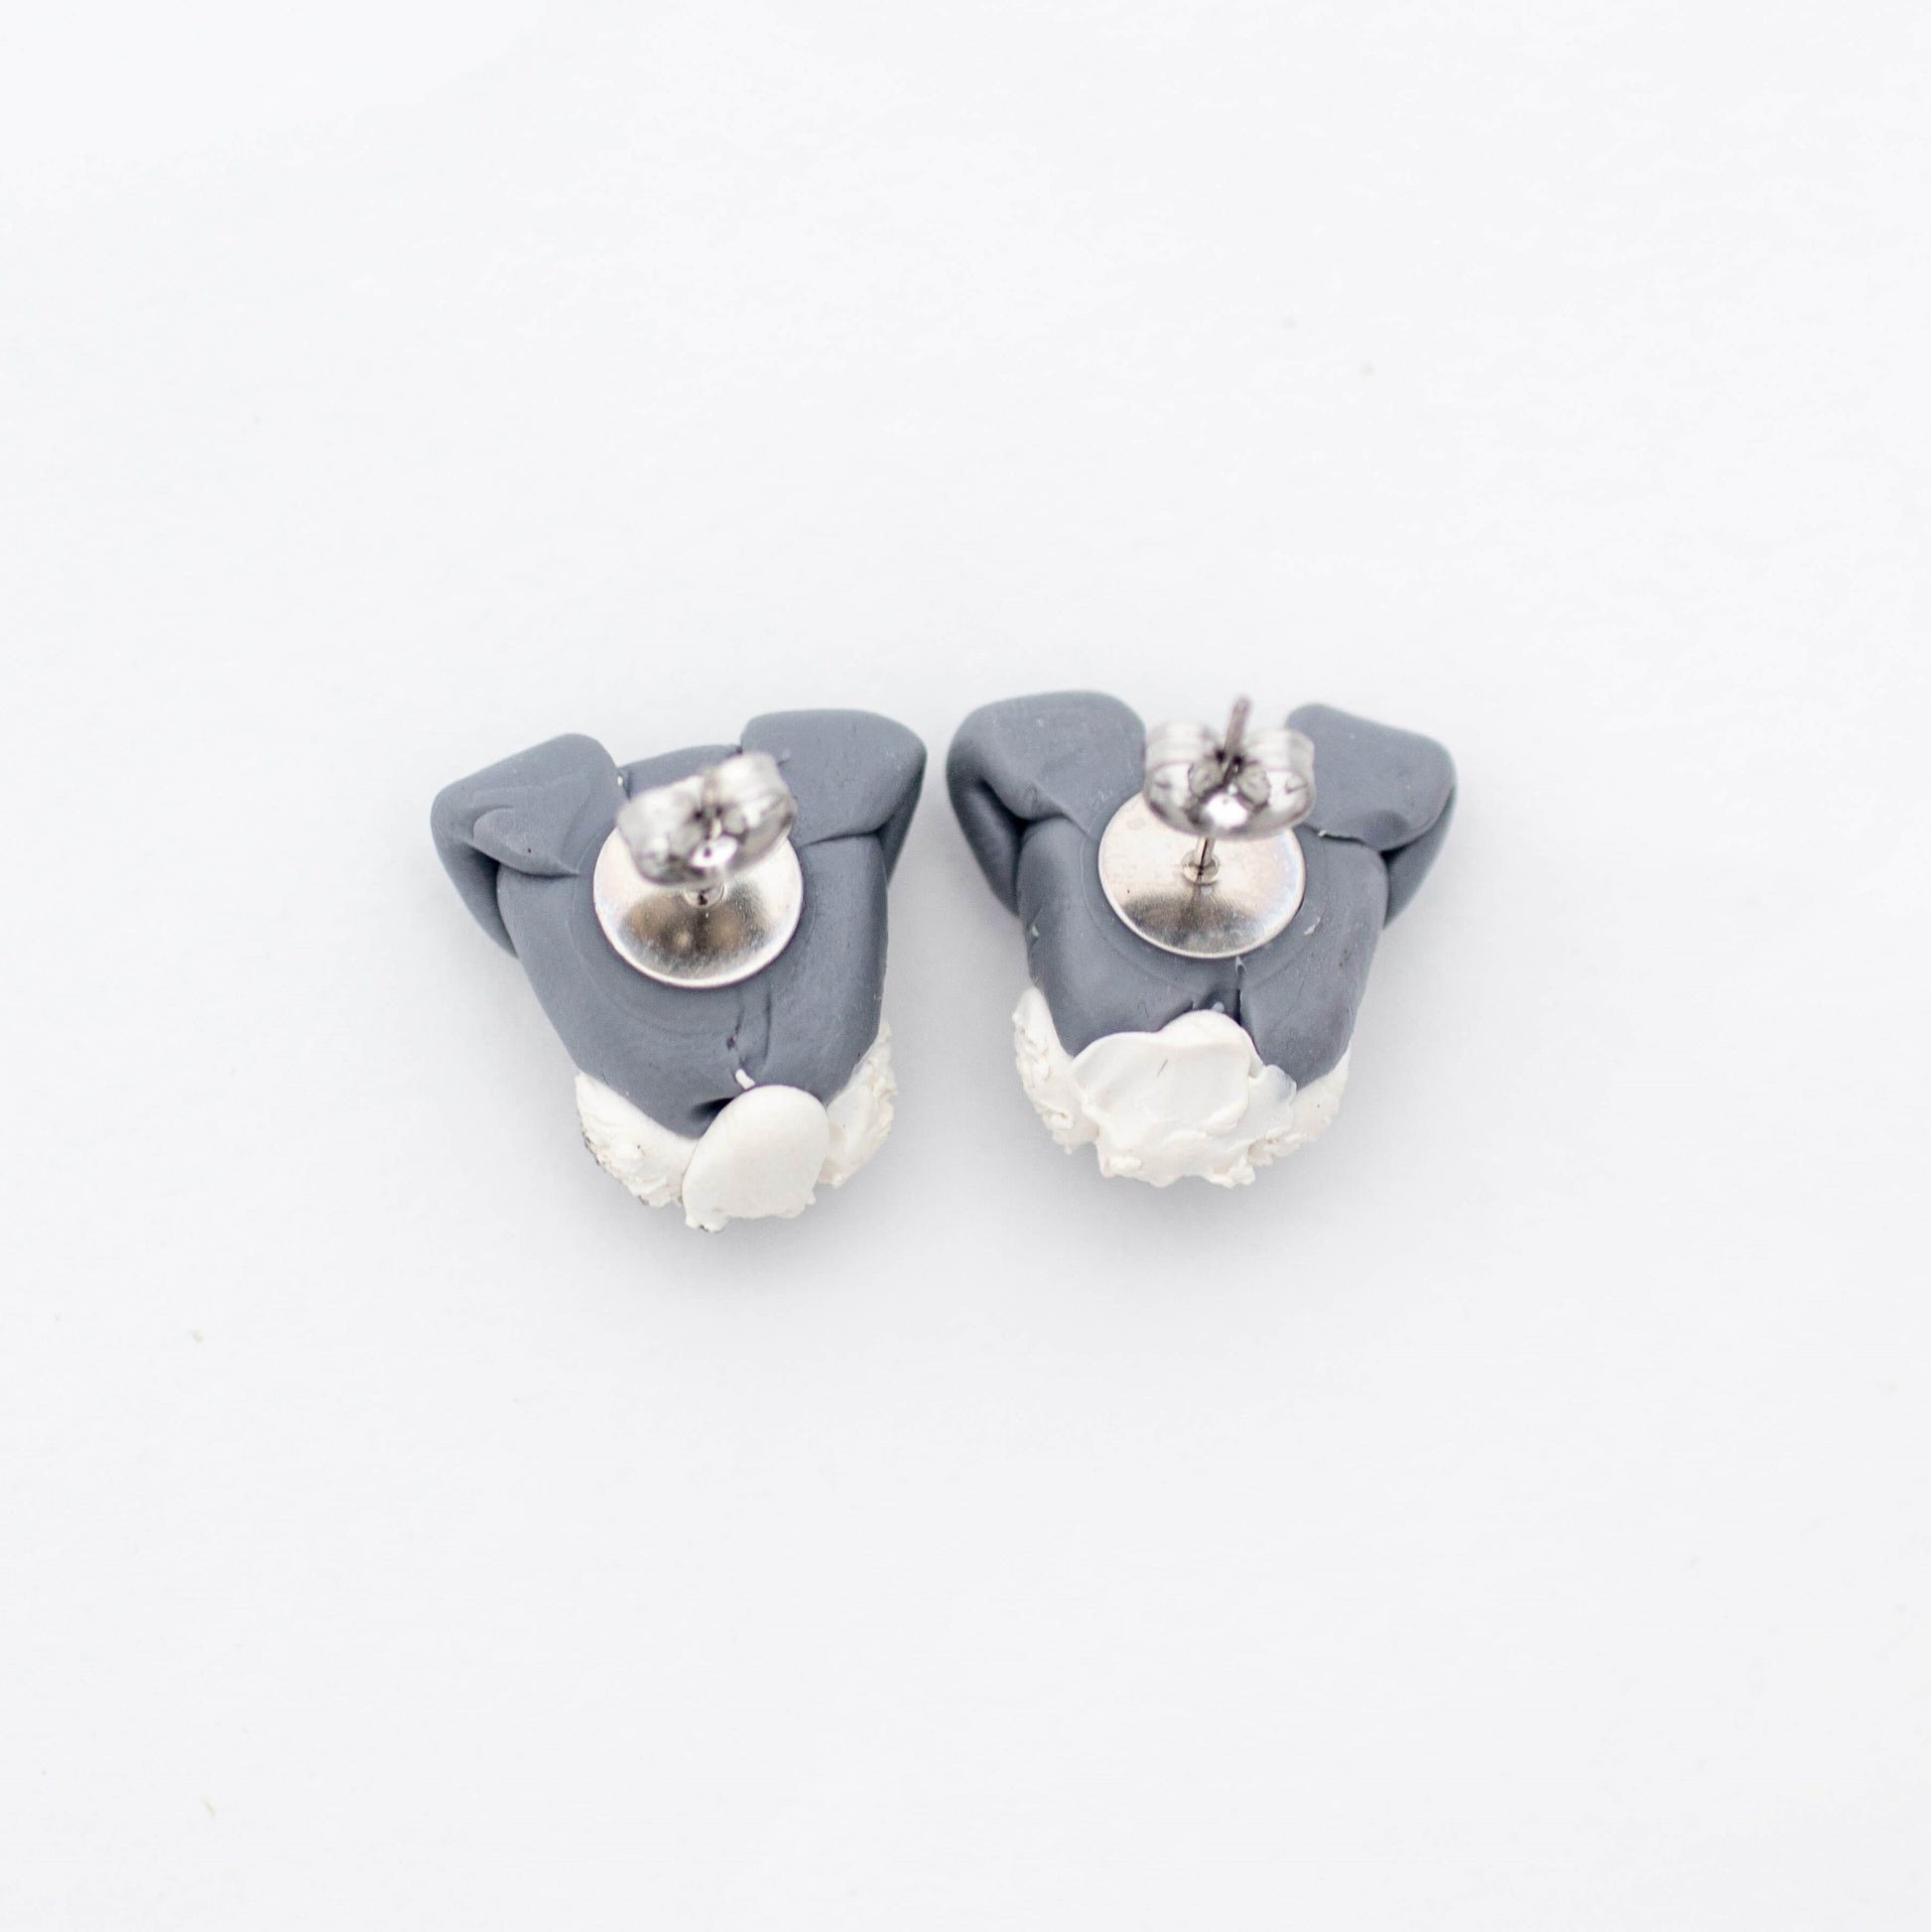 Handmade polymer clay schnauzer stud earrings showing surgical steel backs